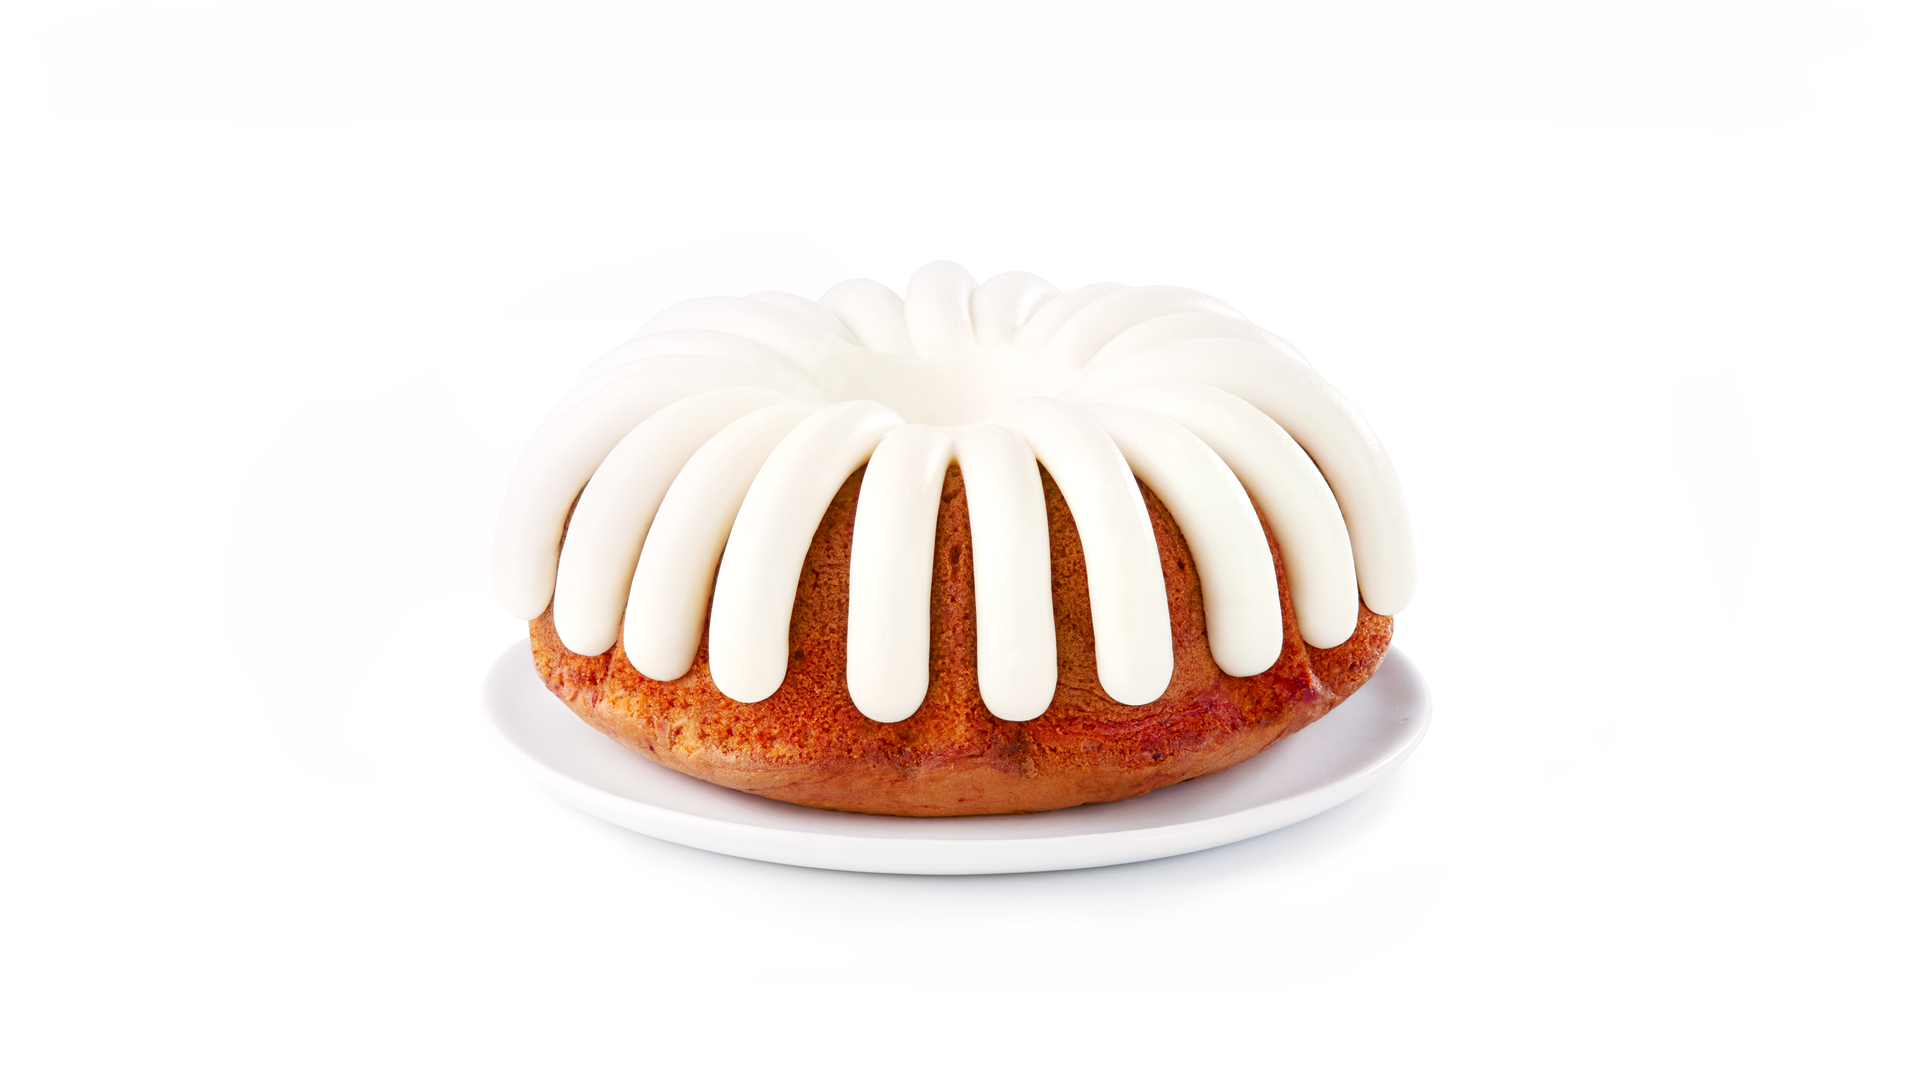 Delicious Bundt Cakes - Nothing Bundt Cakes